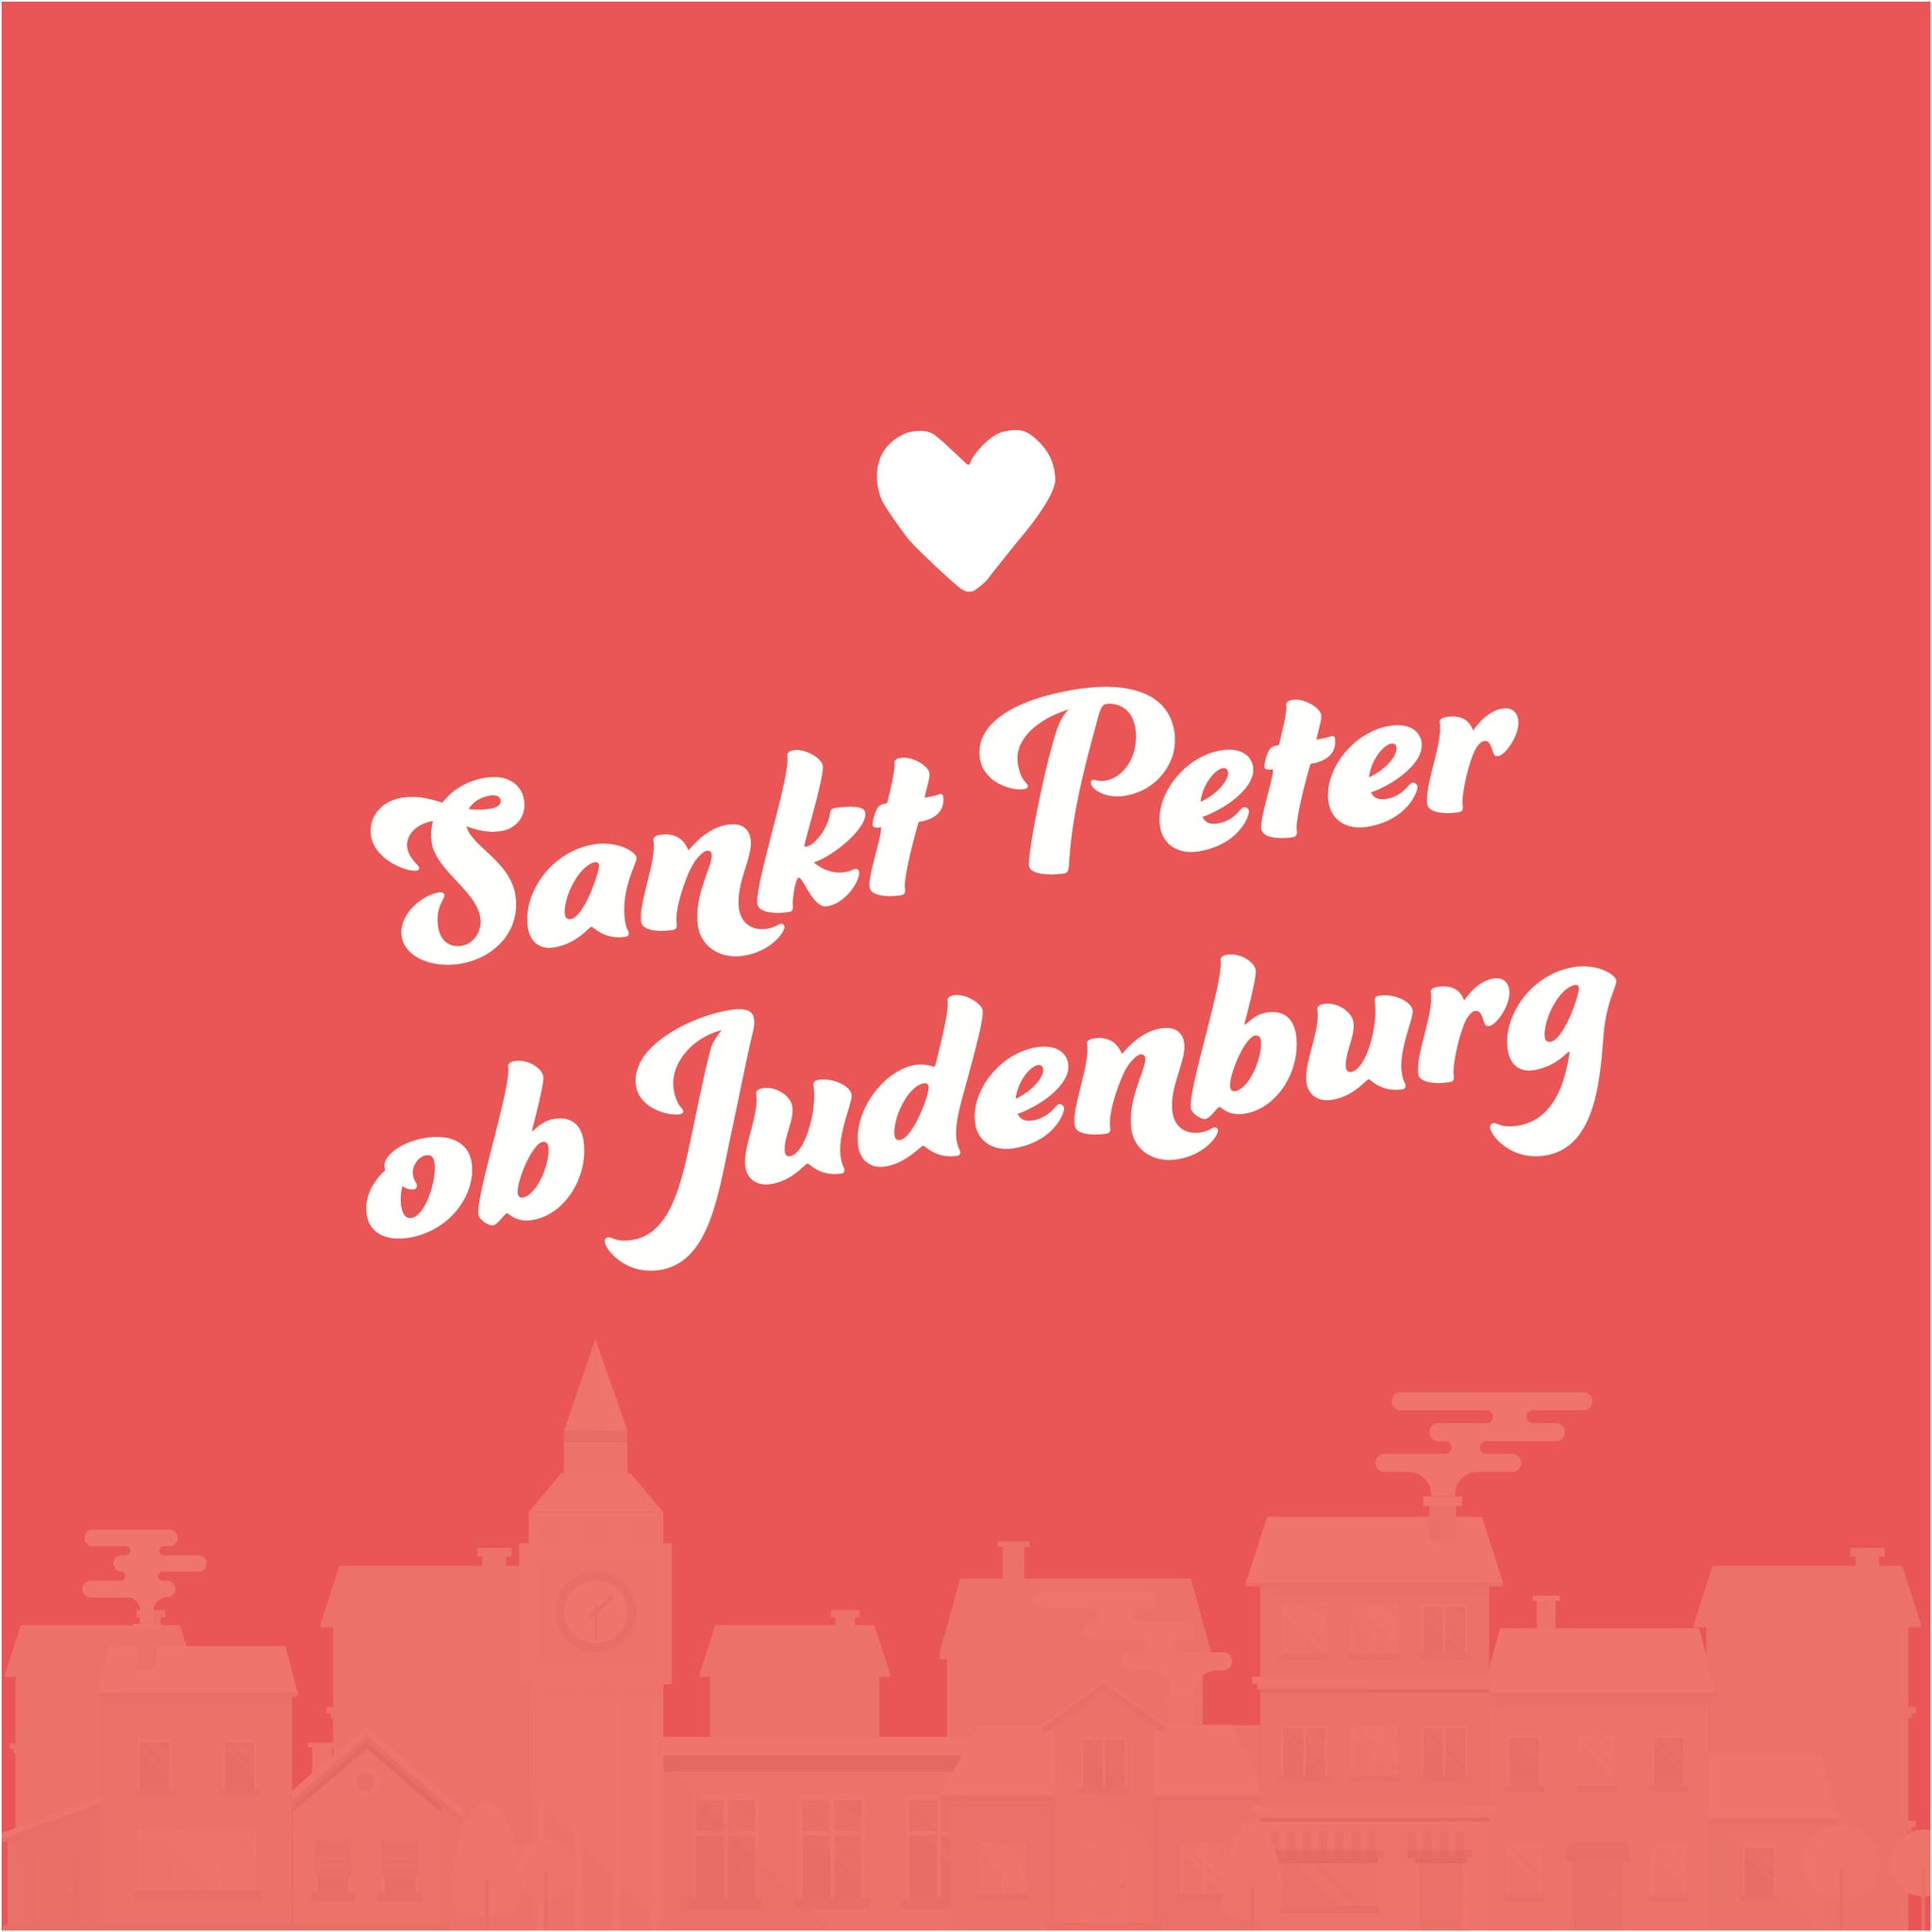 Sankt Peter ob Judenburg